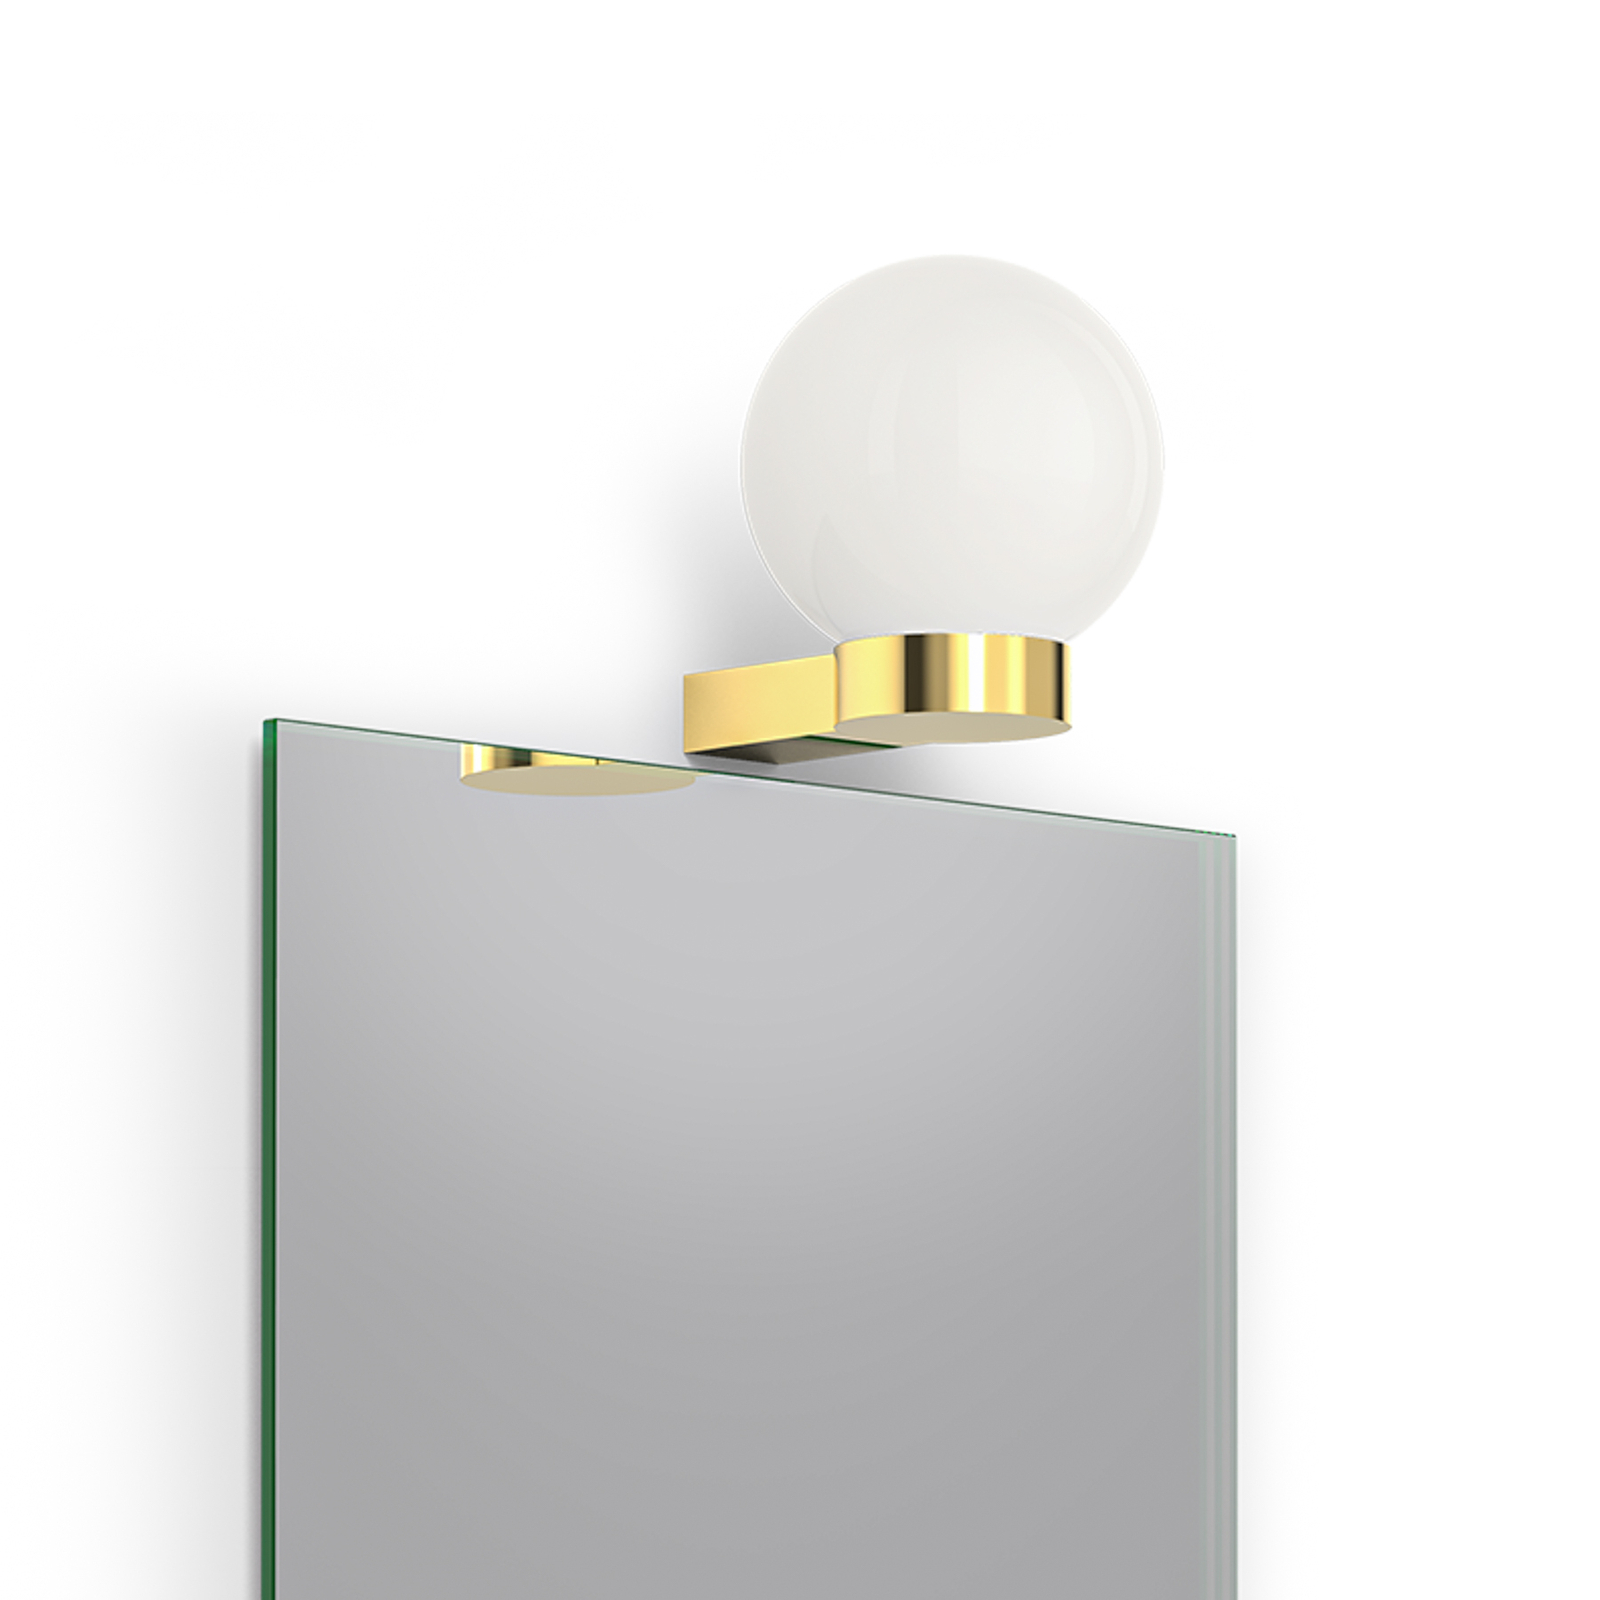 Decor Walther Bar Light wall light, glossy gold